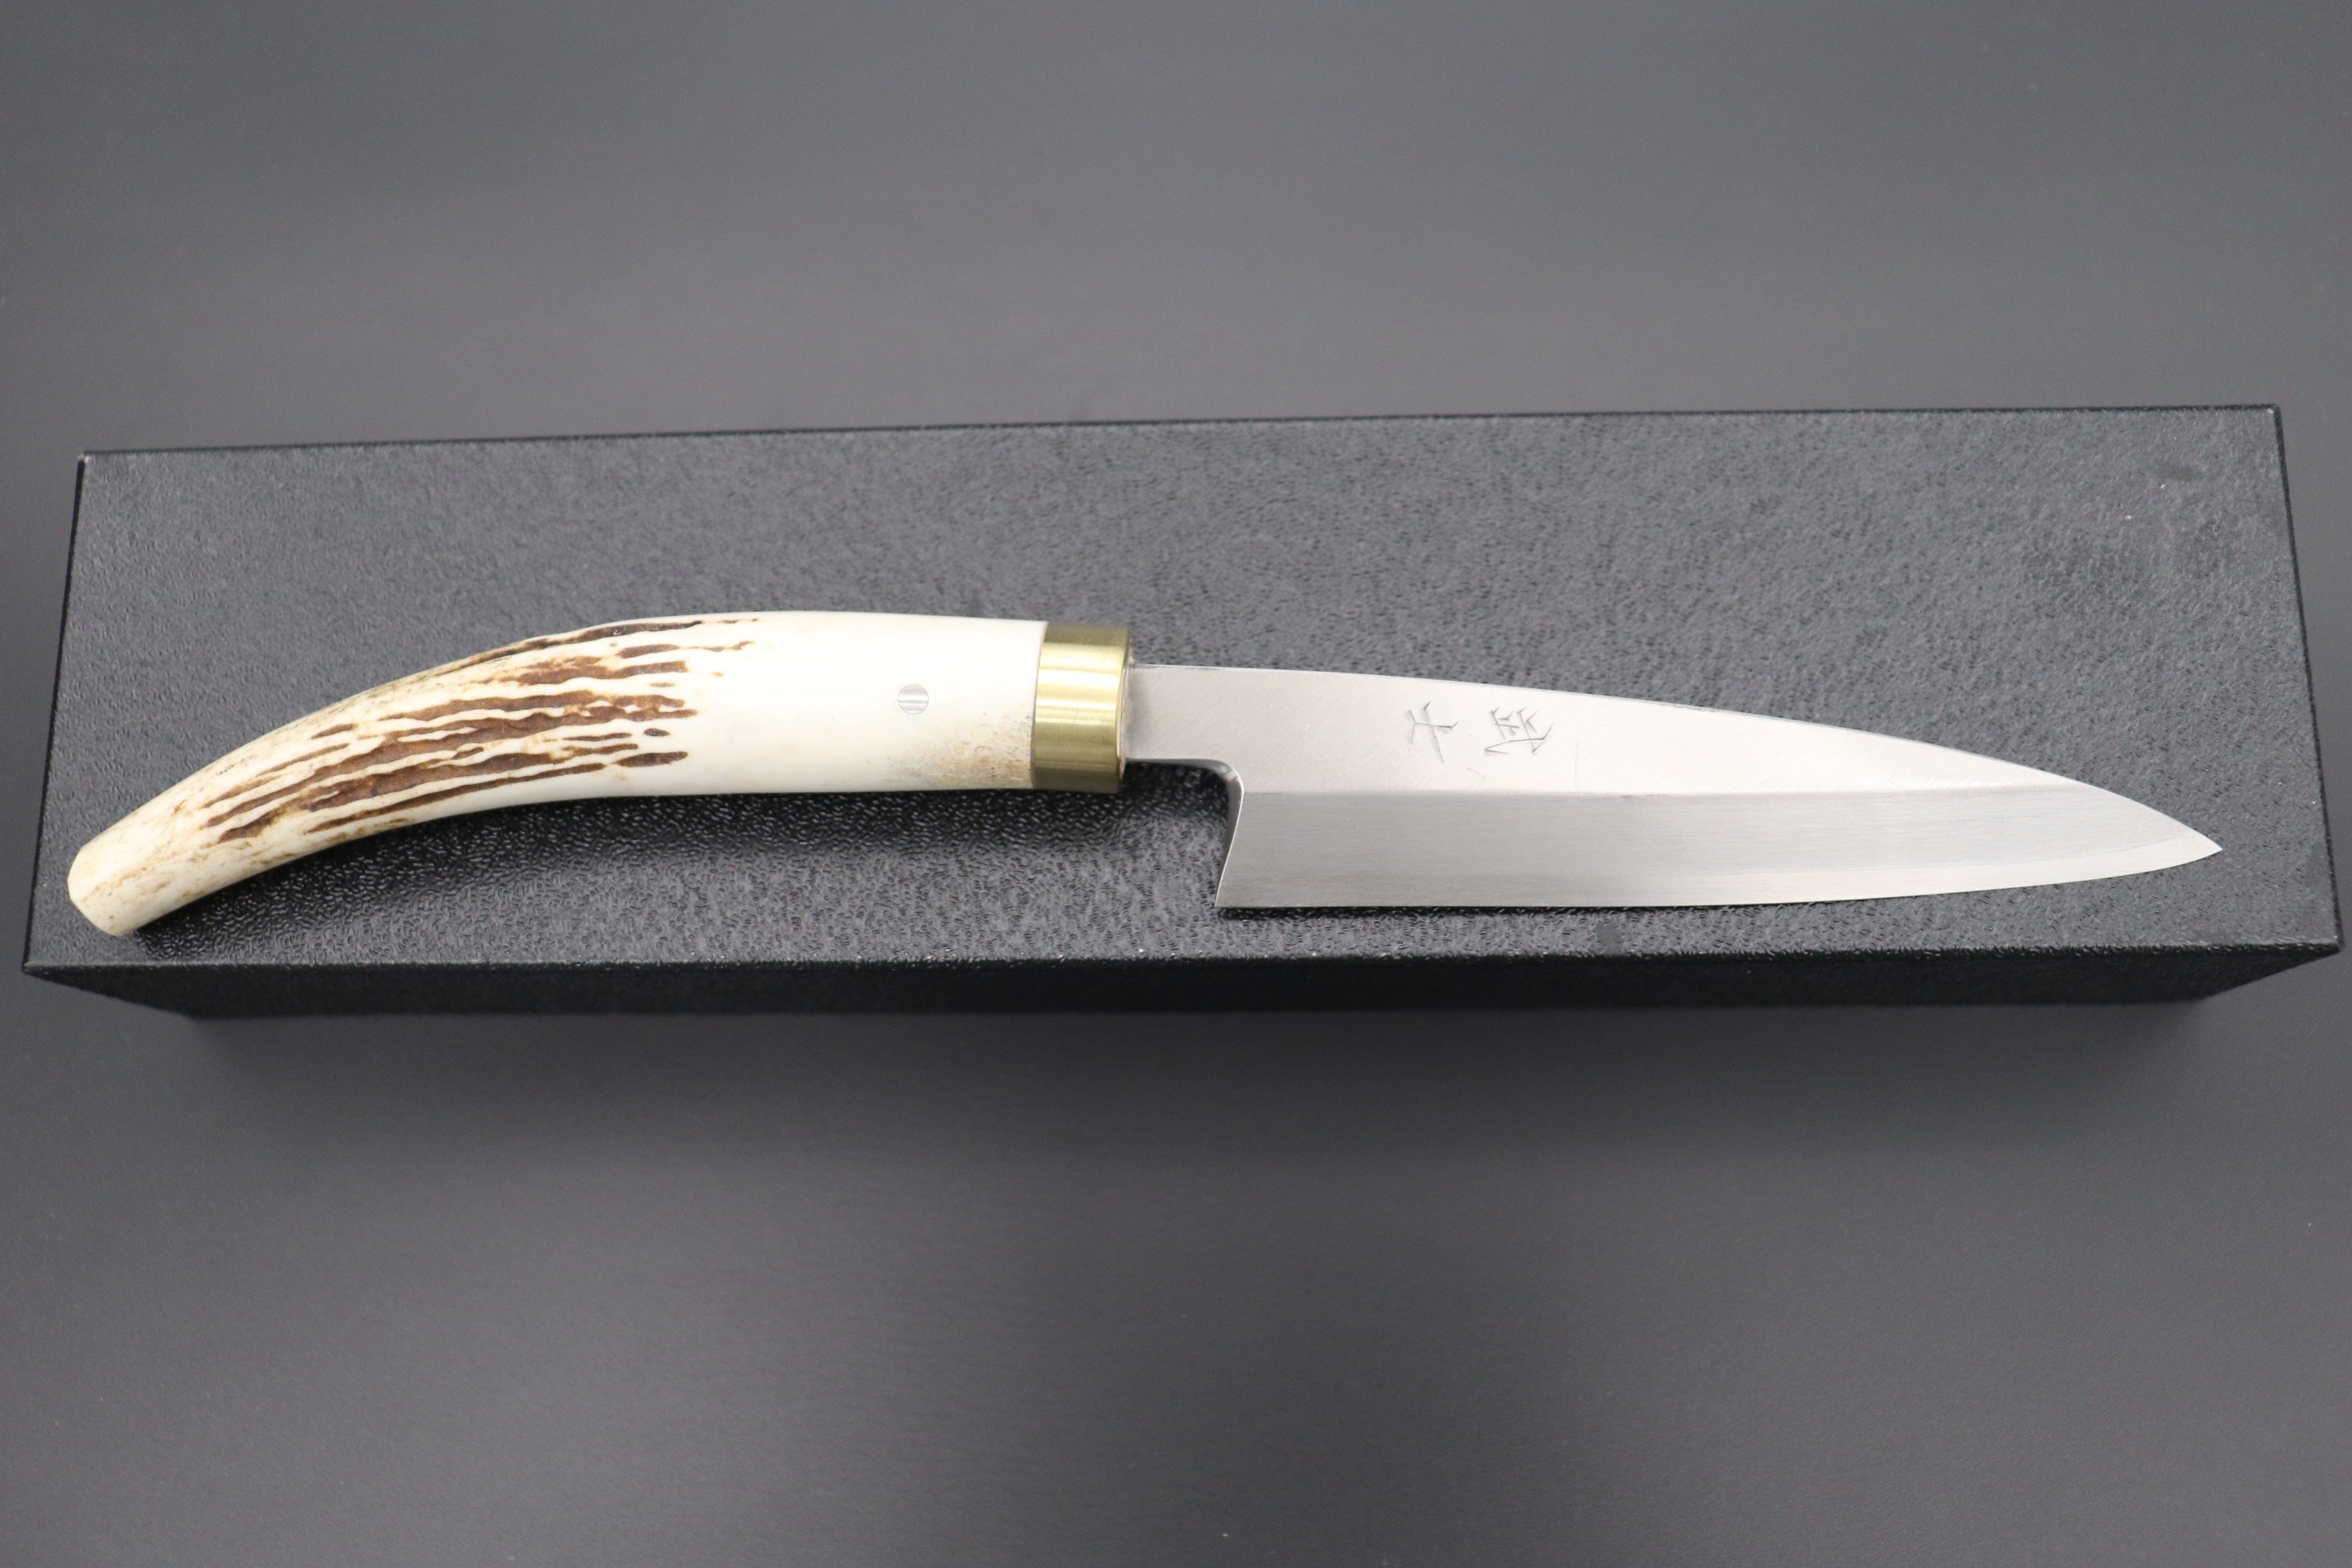 2-piece Stag Antler Outdoor Knife Set